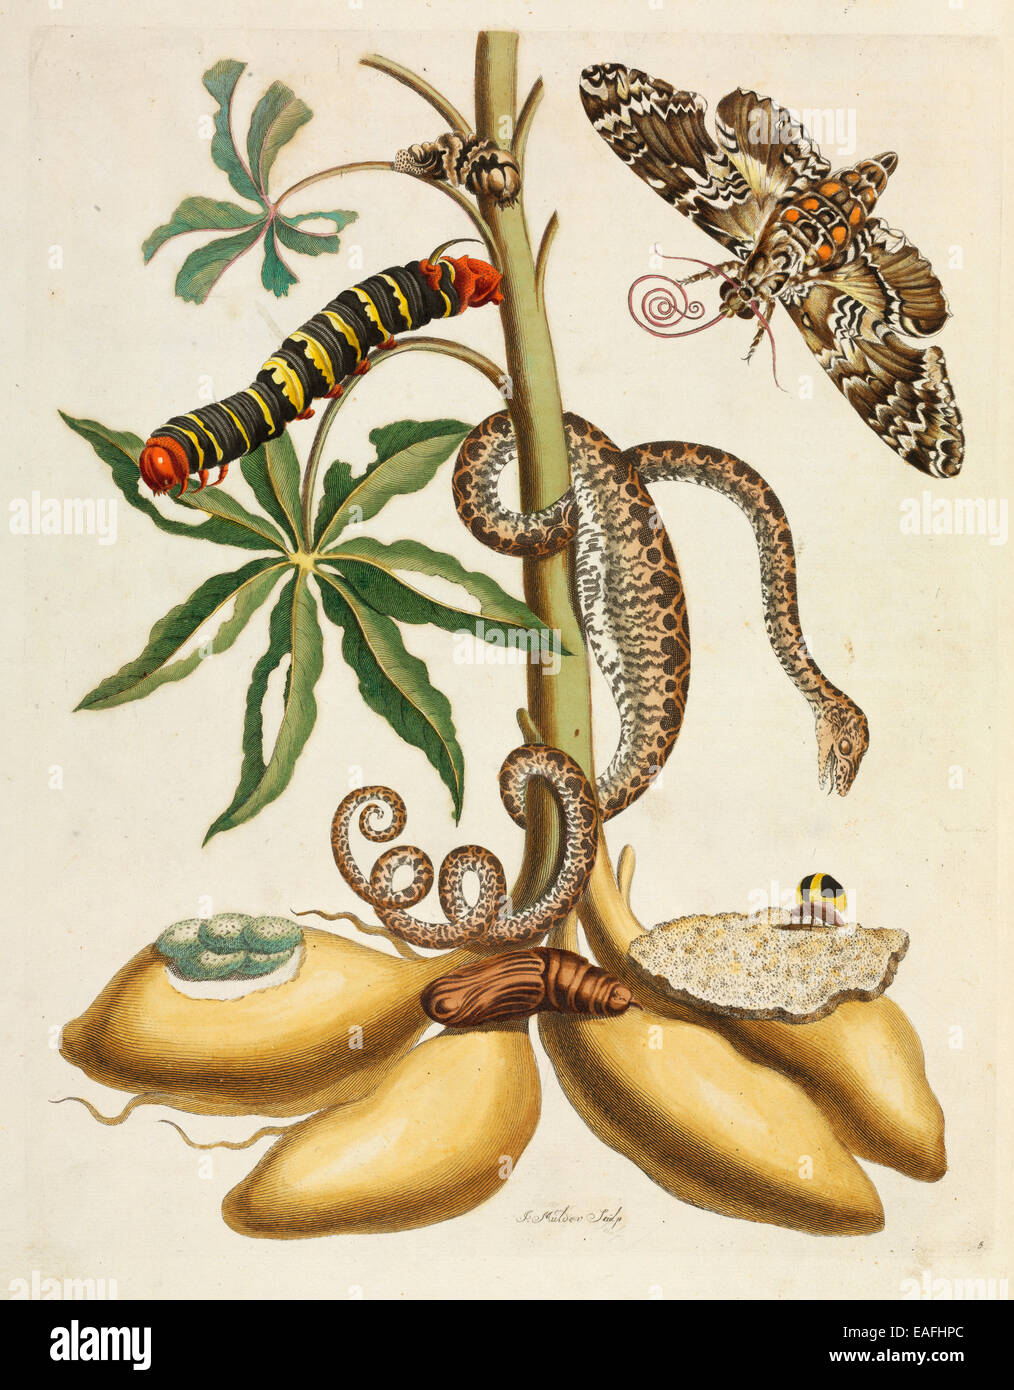 Manihot esculenta, Cassava plant with Pseudosphinx tetrio, Sphinx moth adult and caterpillar and tree boa Stock Photo